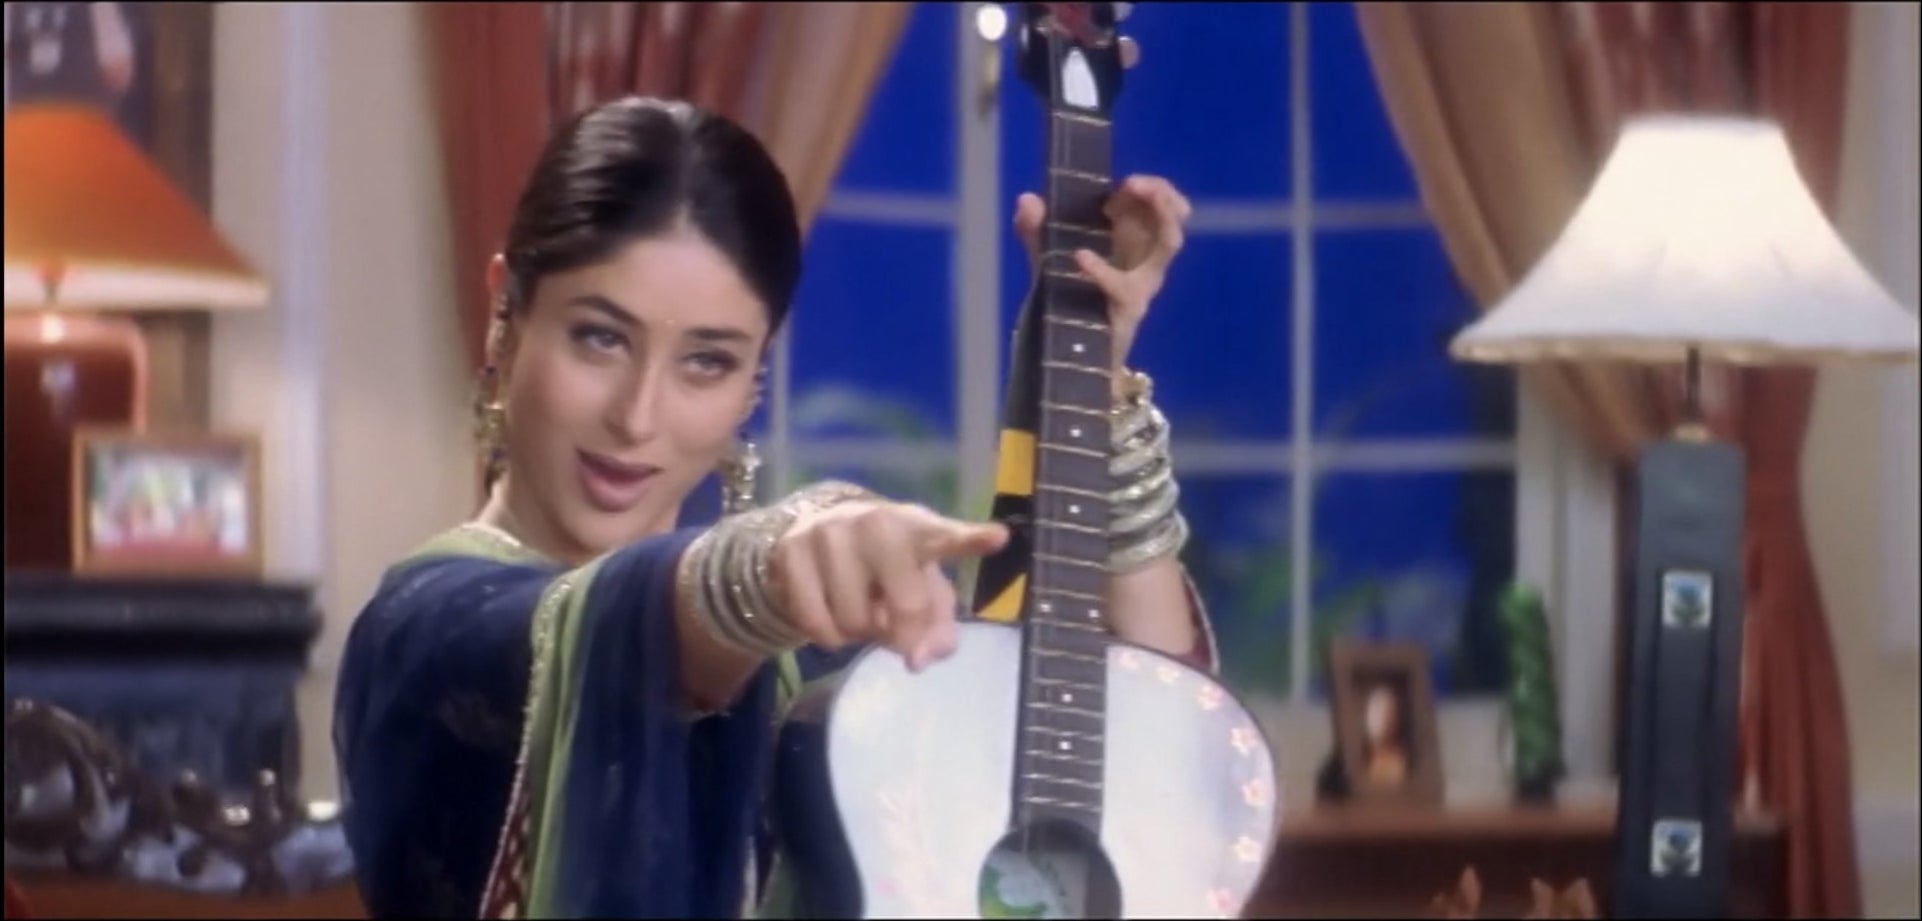 Kareena Kapoor playing guitar like a sitar